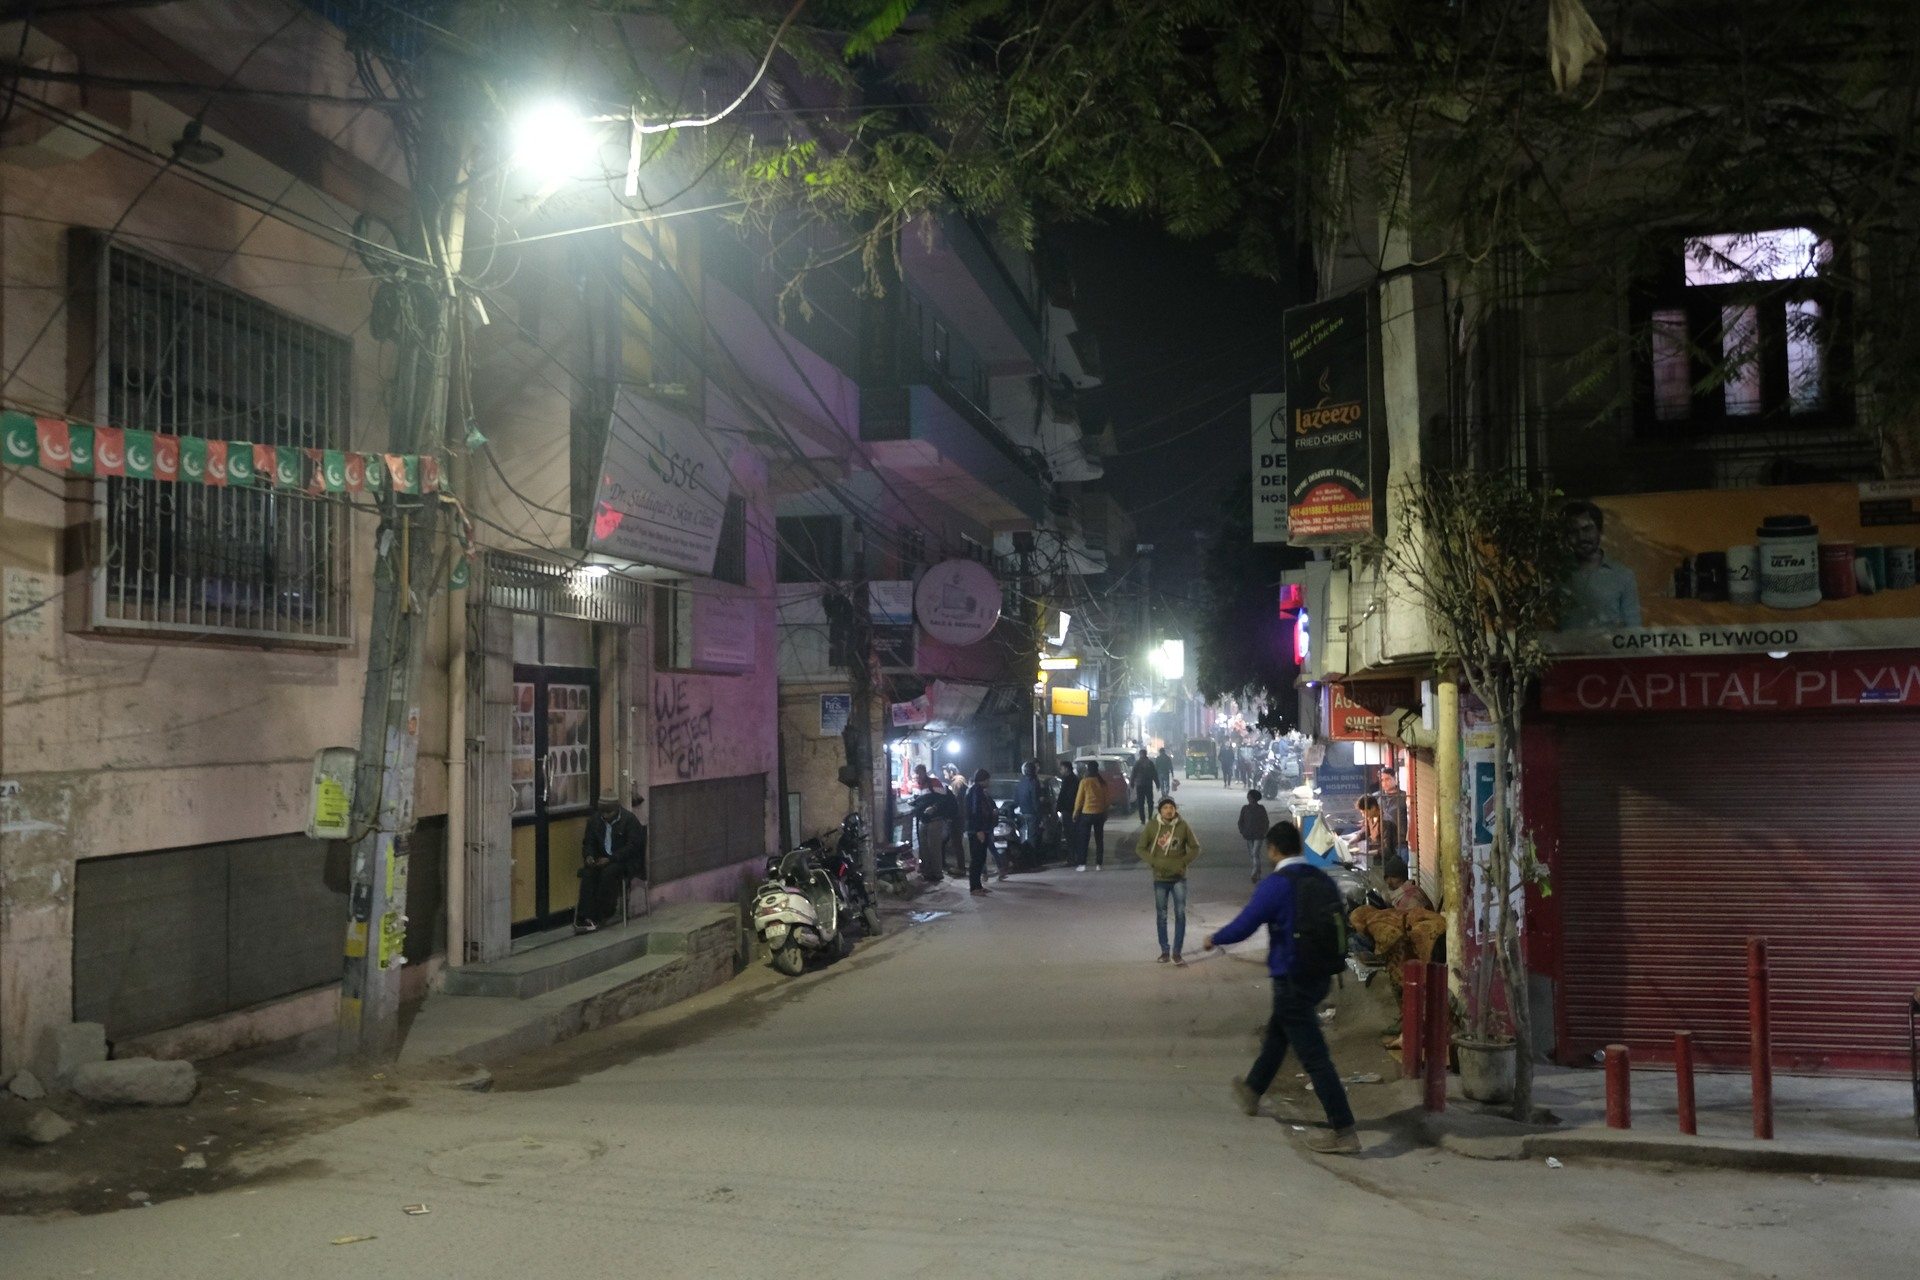 A predominantly Muslim neighborhood in New Delhi